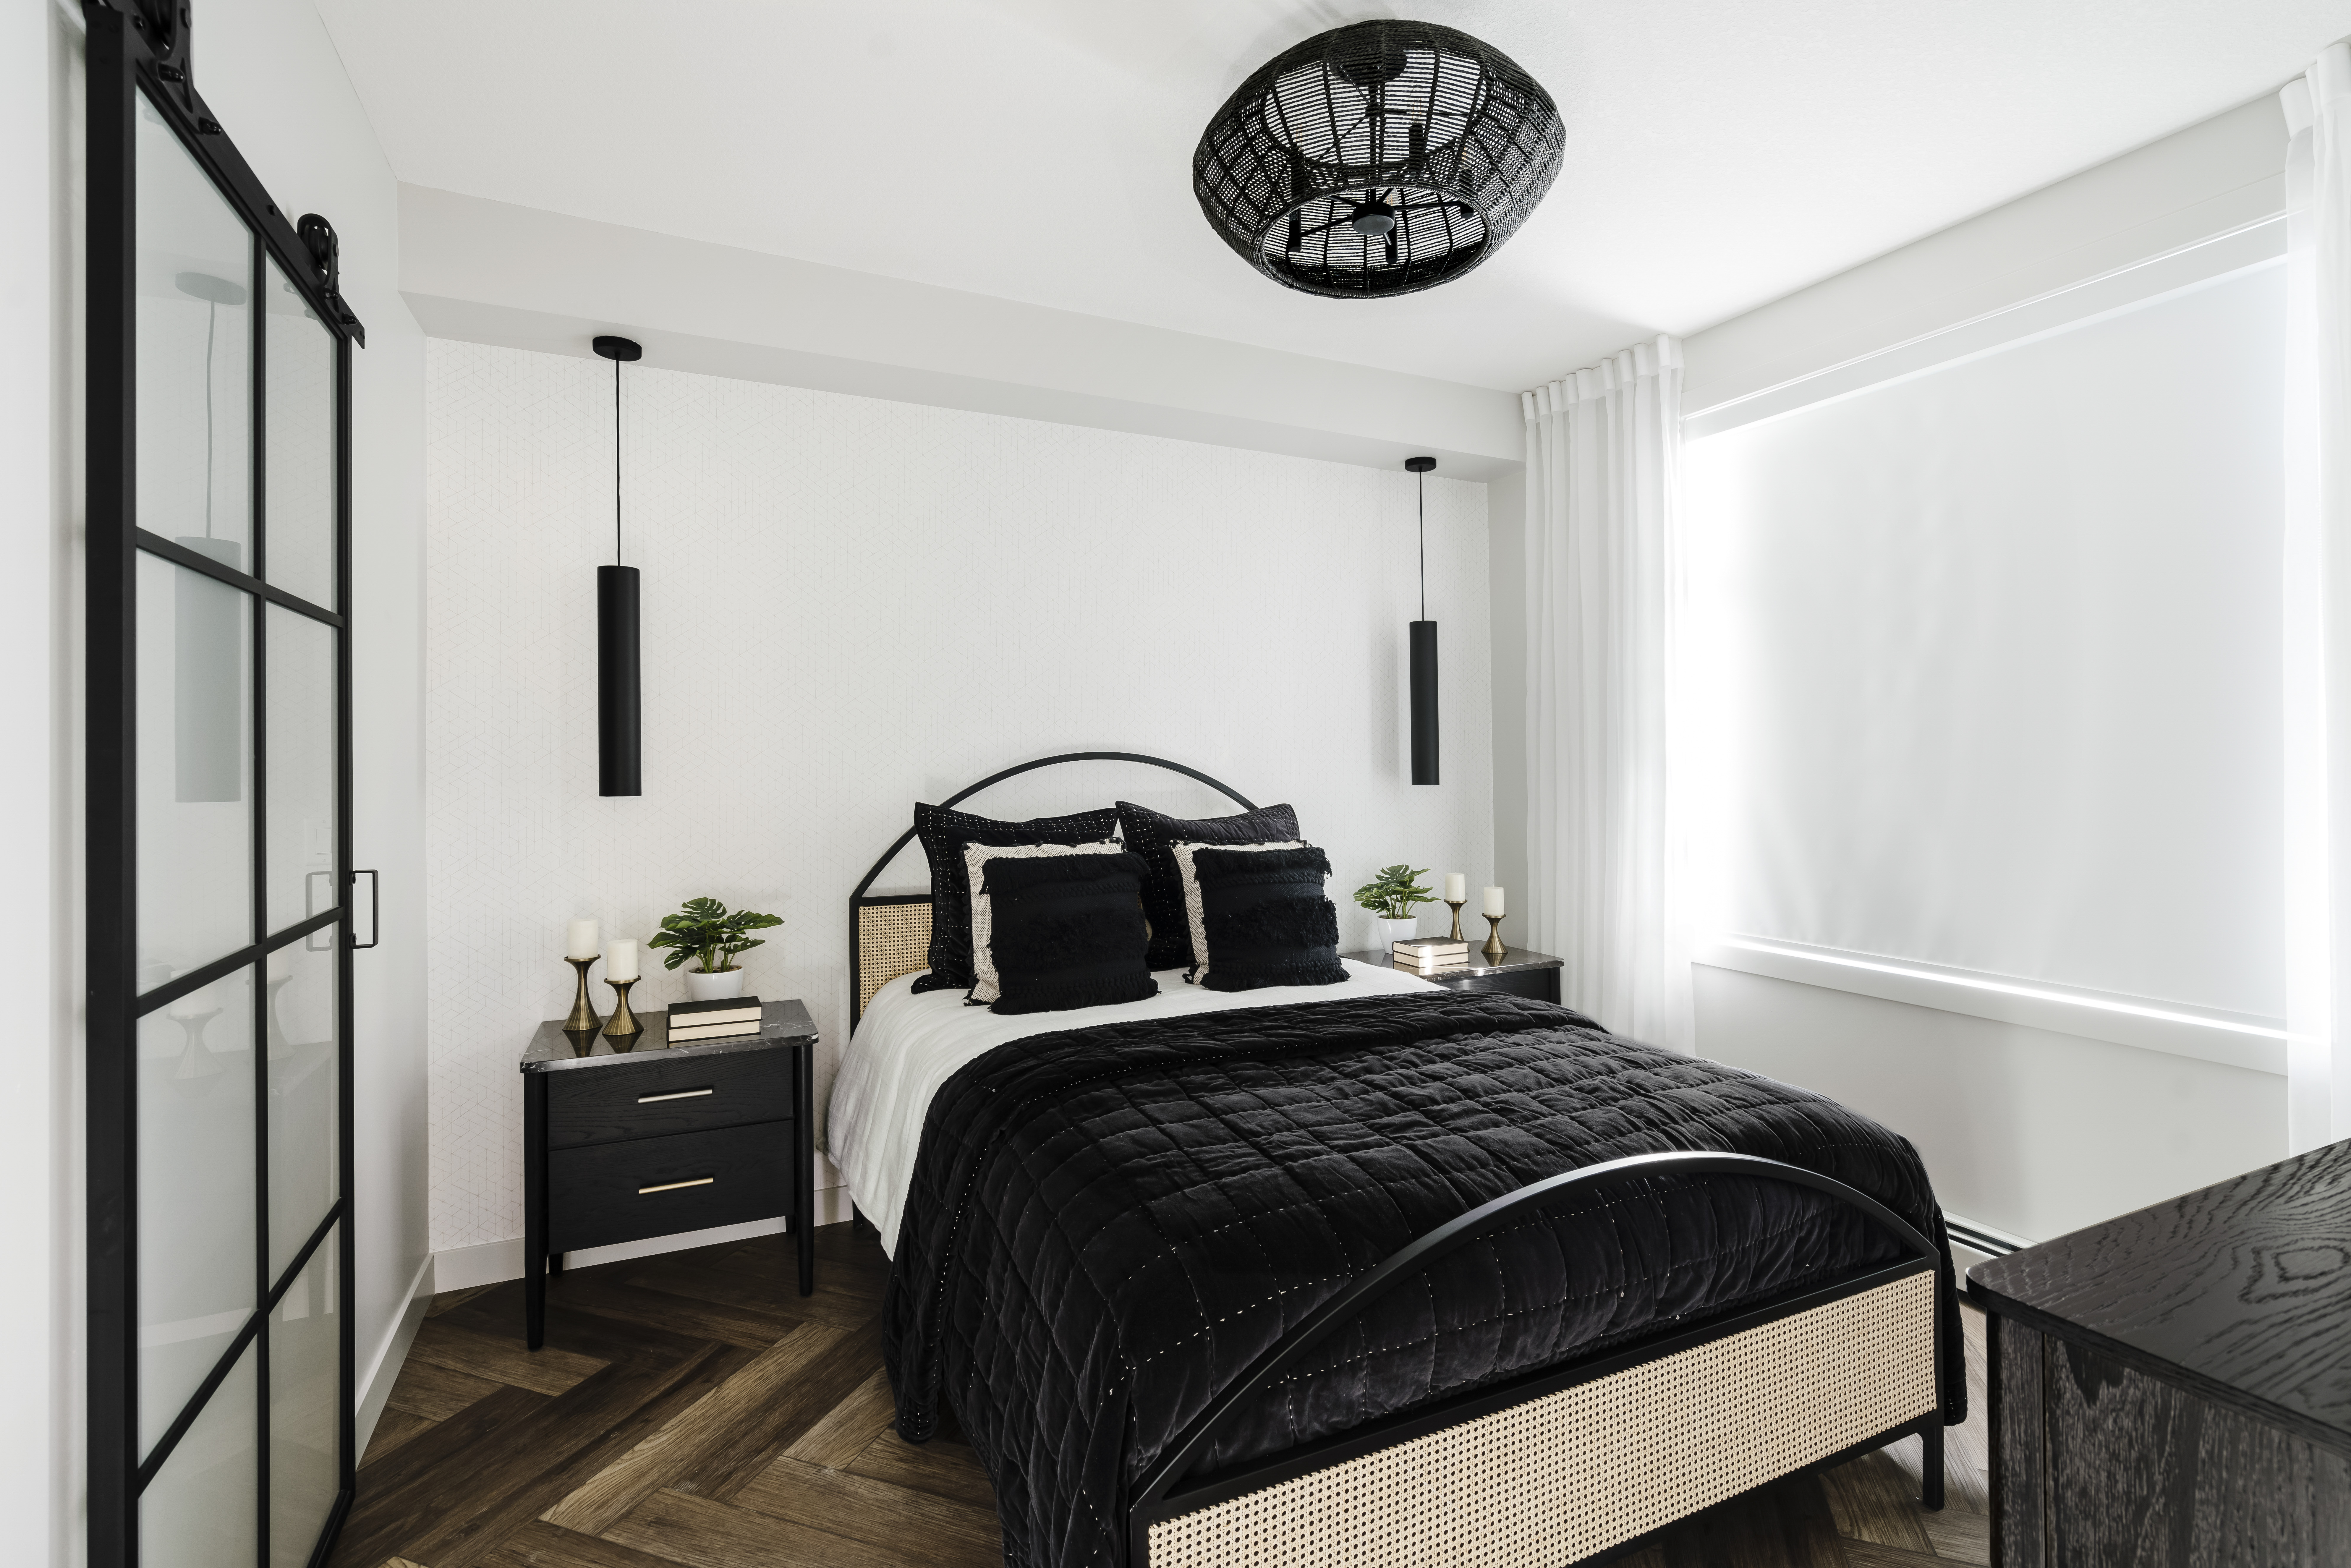 Bedroom with herringbone flooring and black feature lights